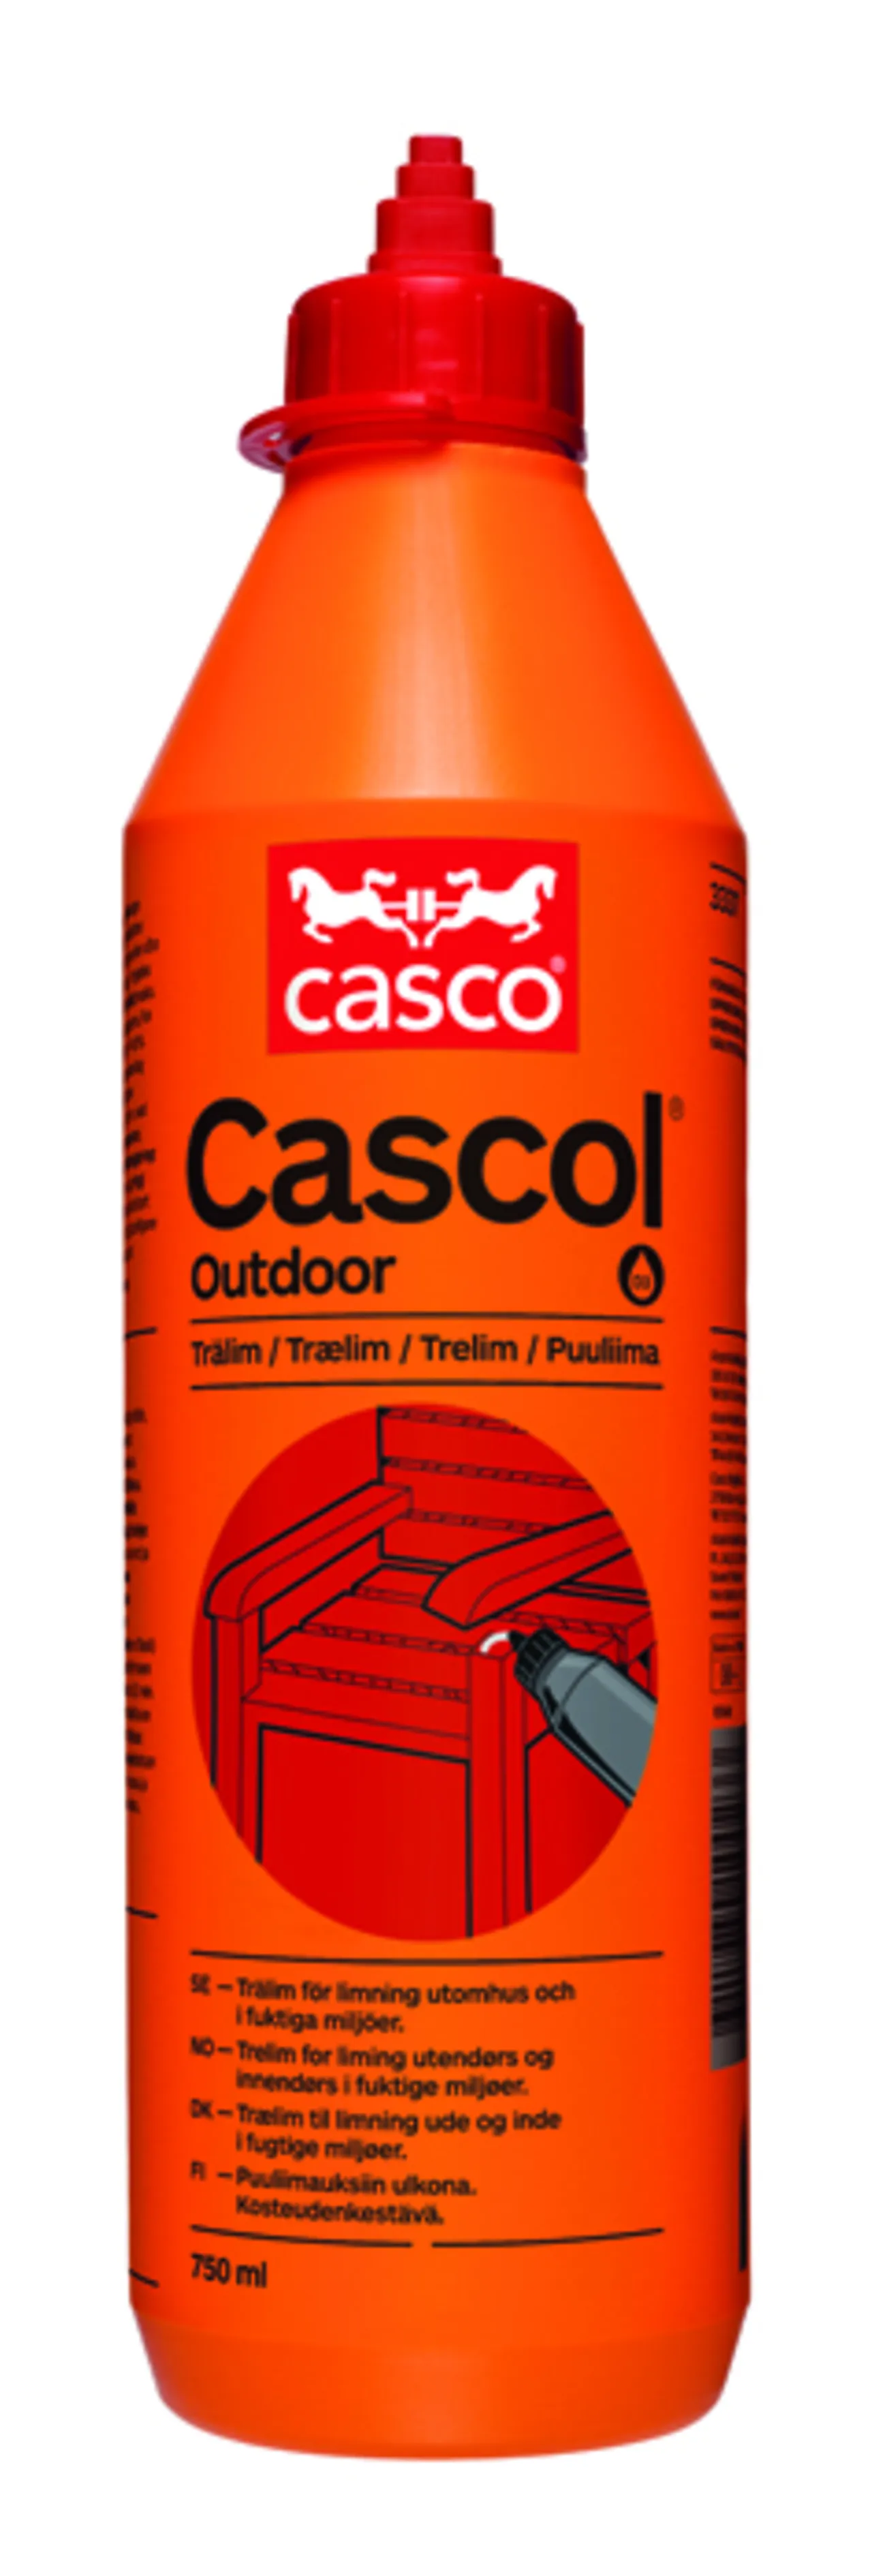 Trelim Cascol Outdoor 750 ml